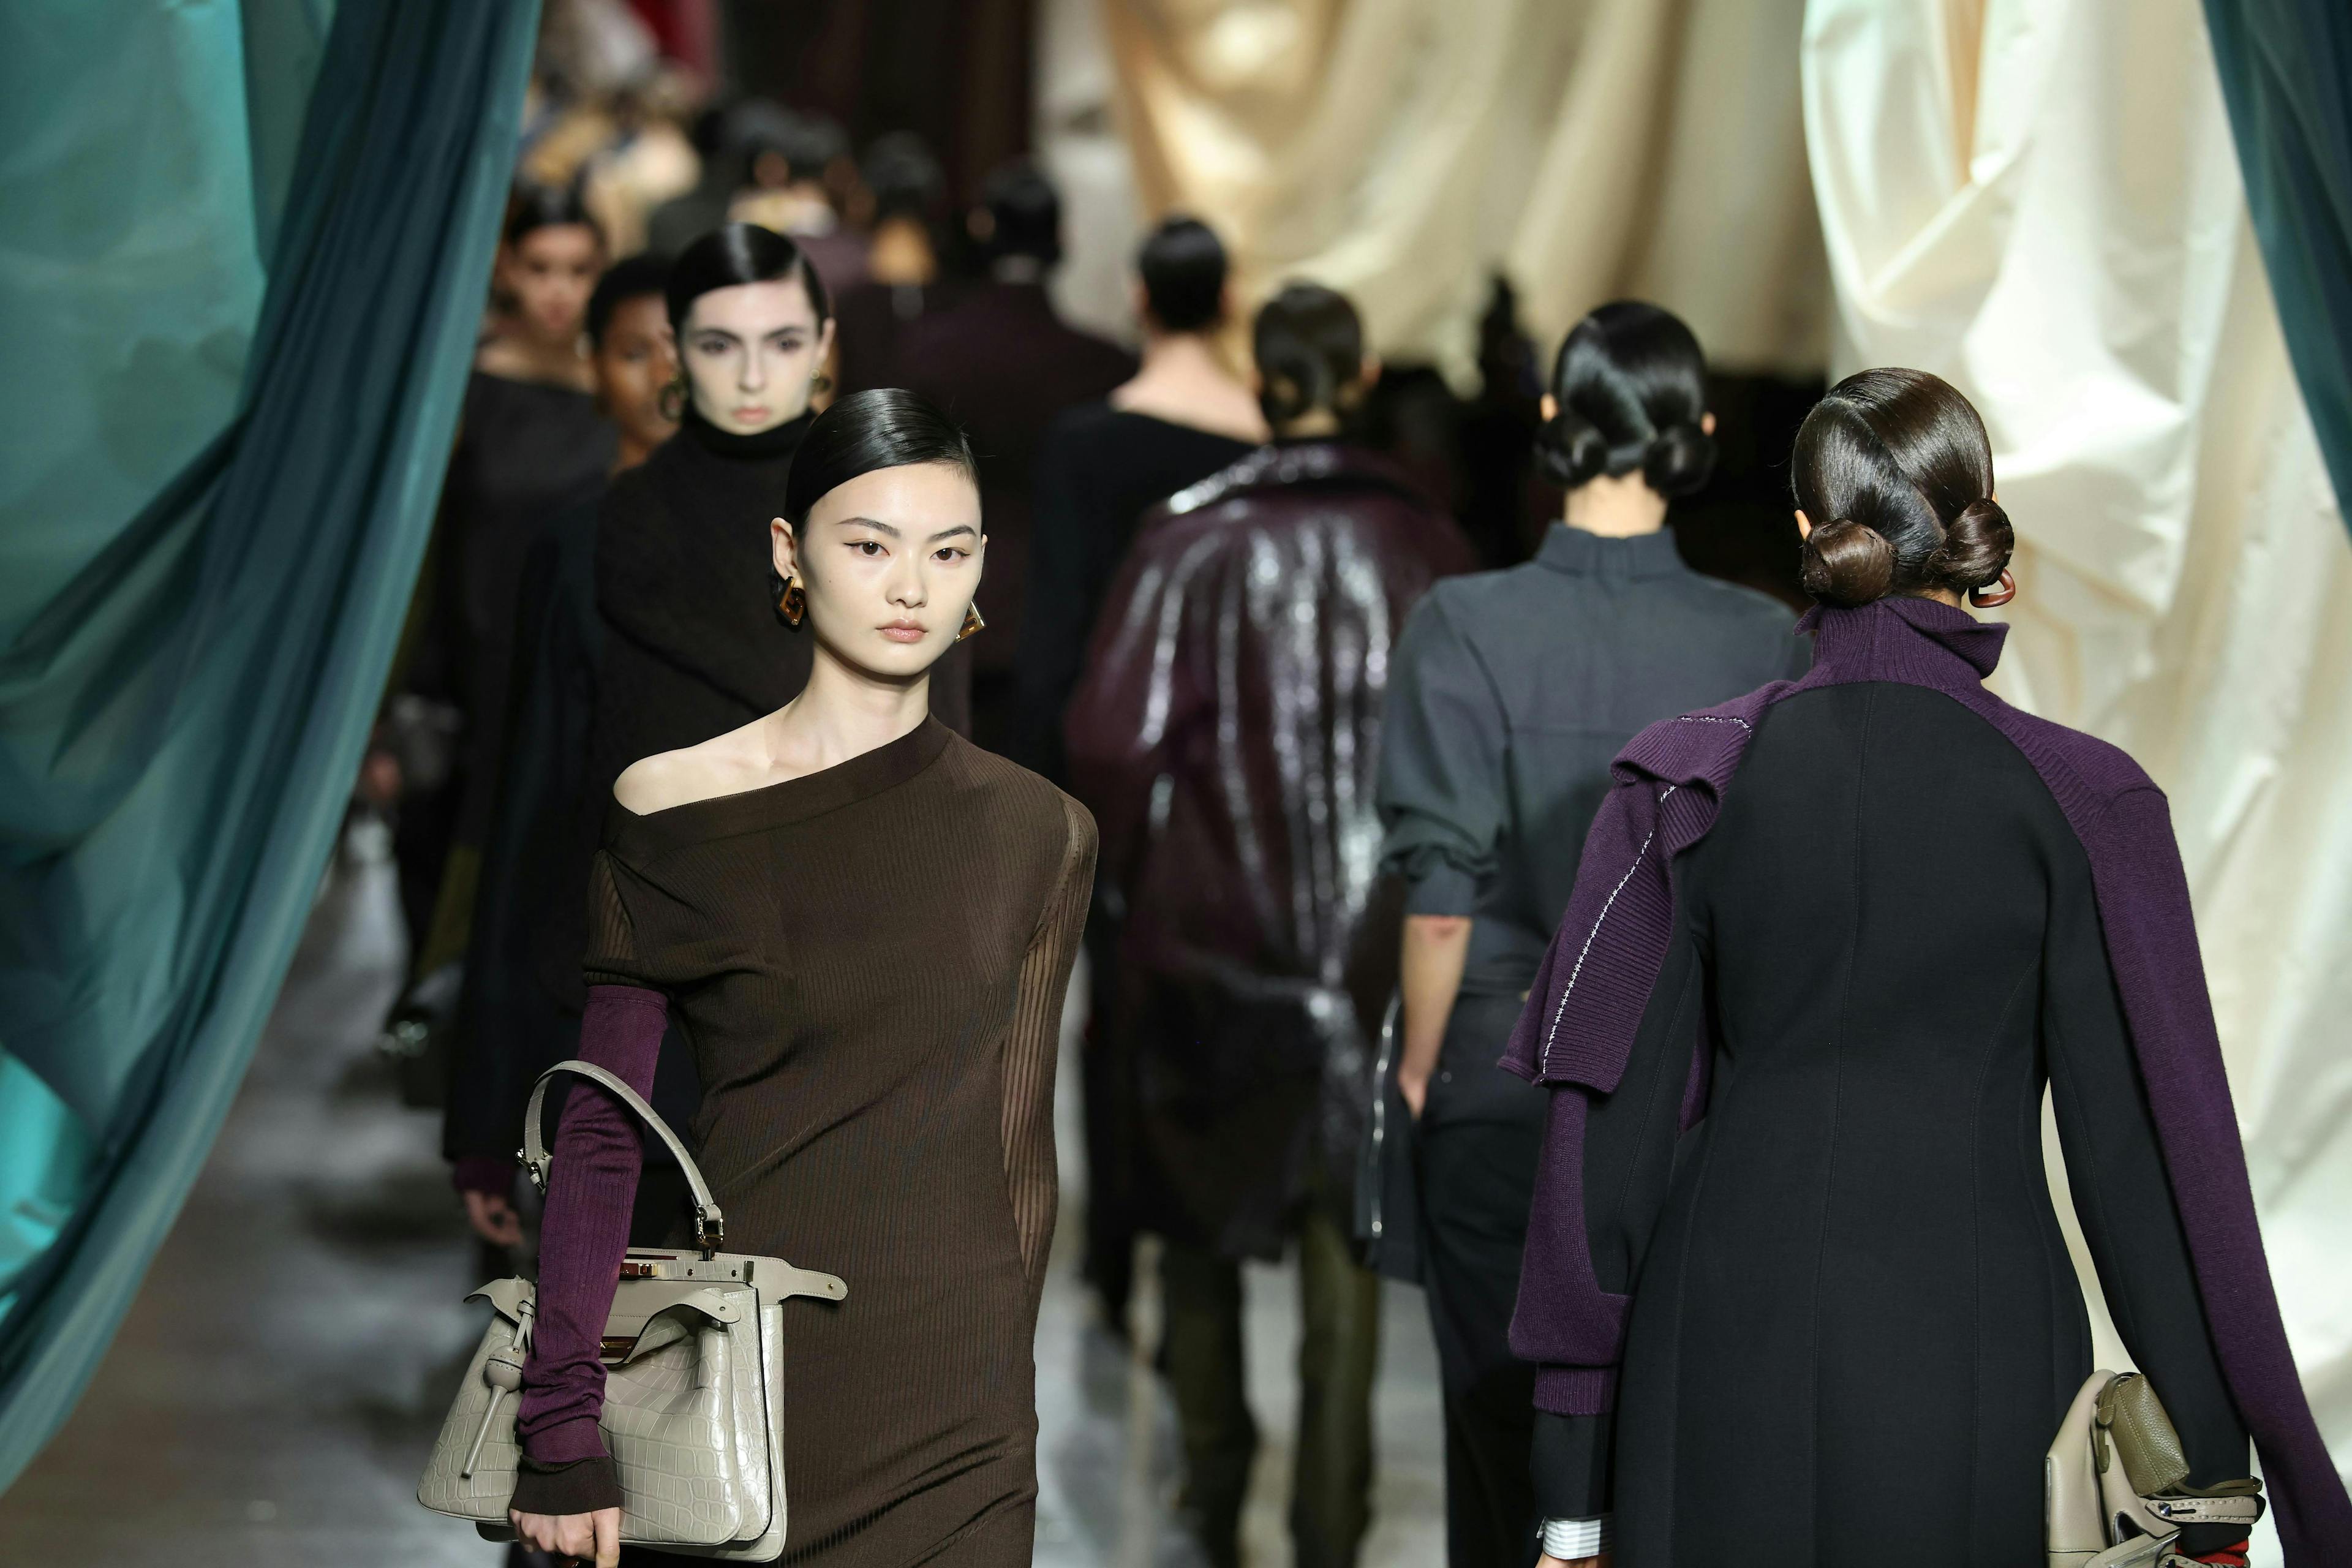 milan bag handbag long sleeve fashion adult female person woman purse coat